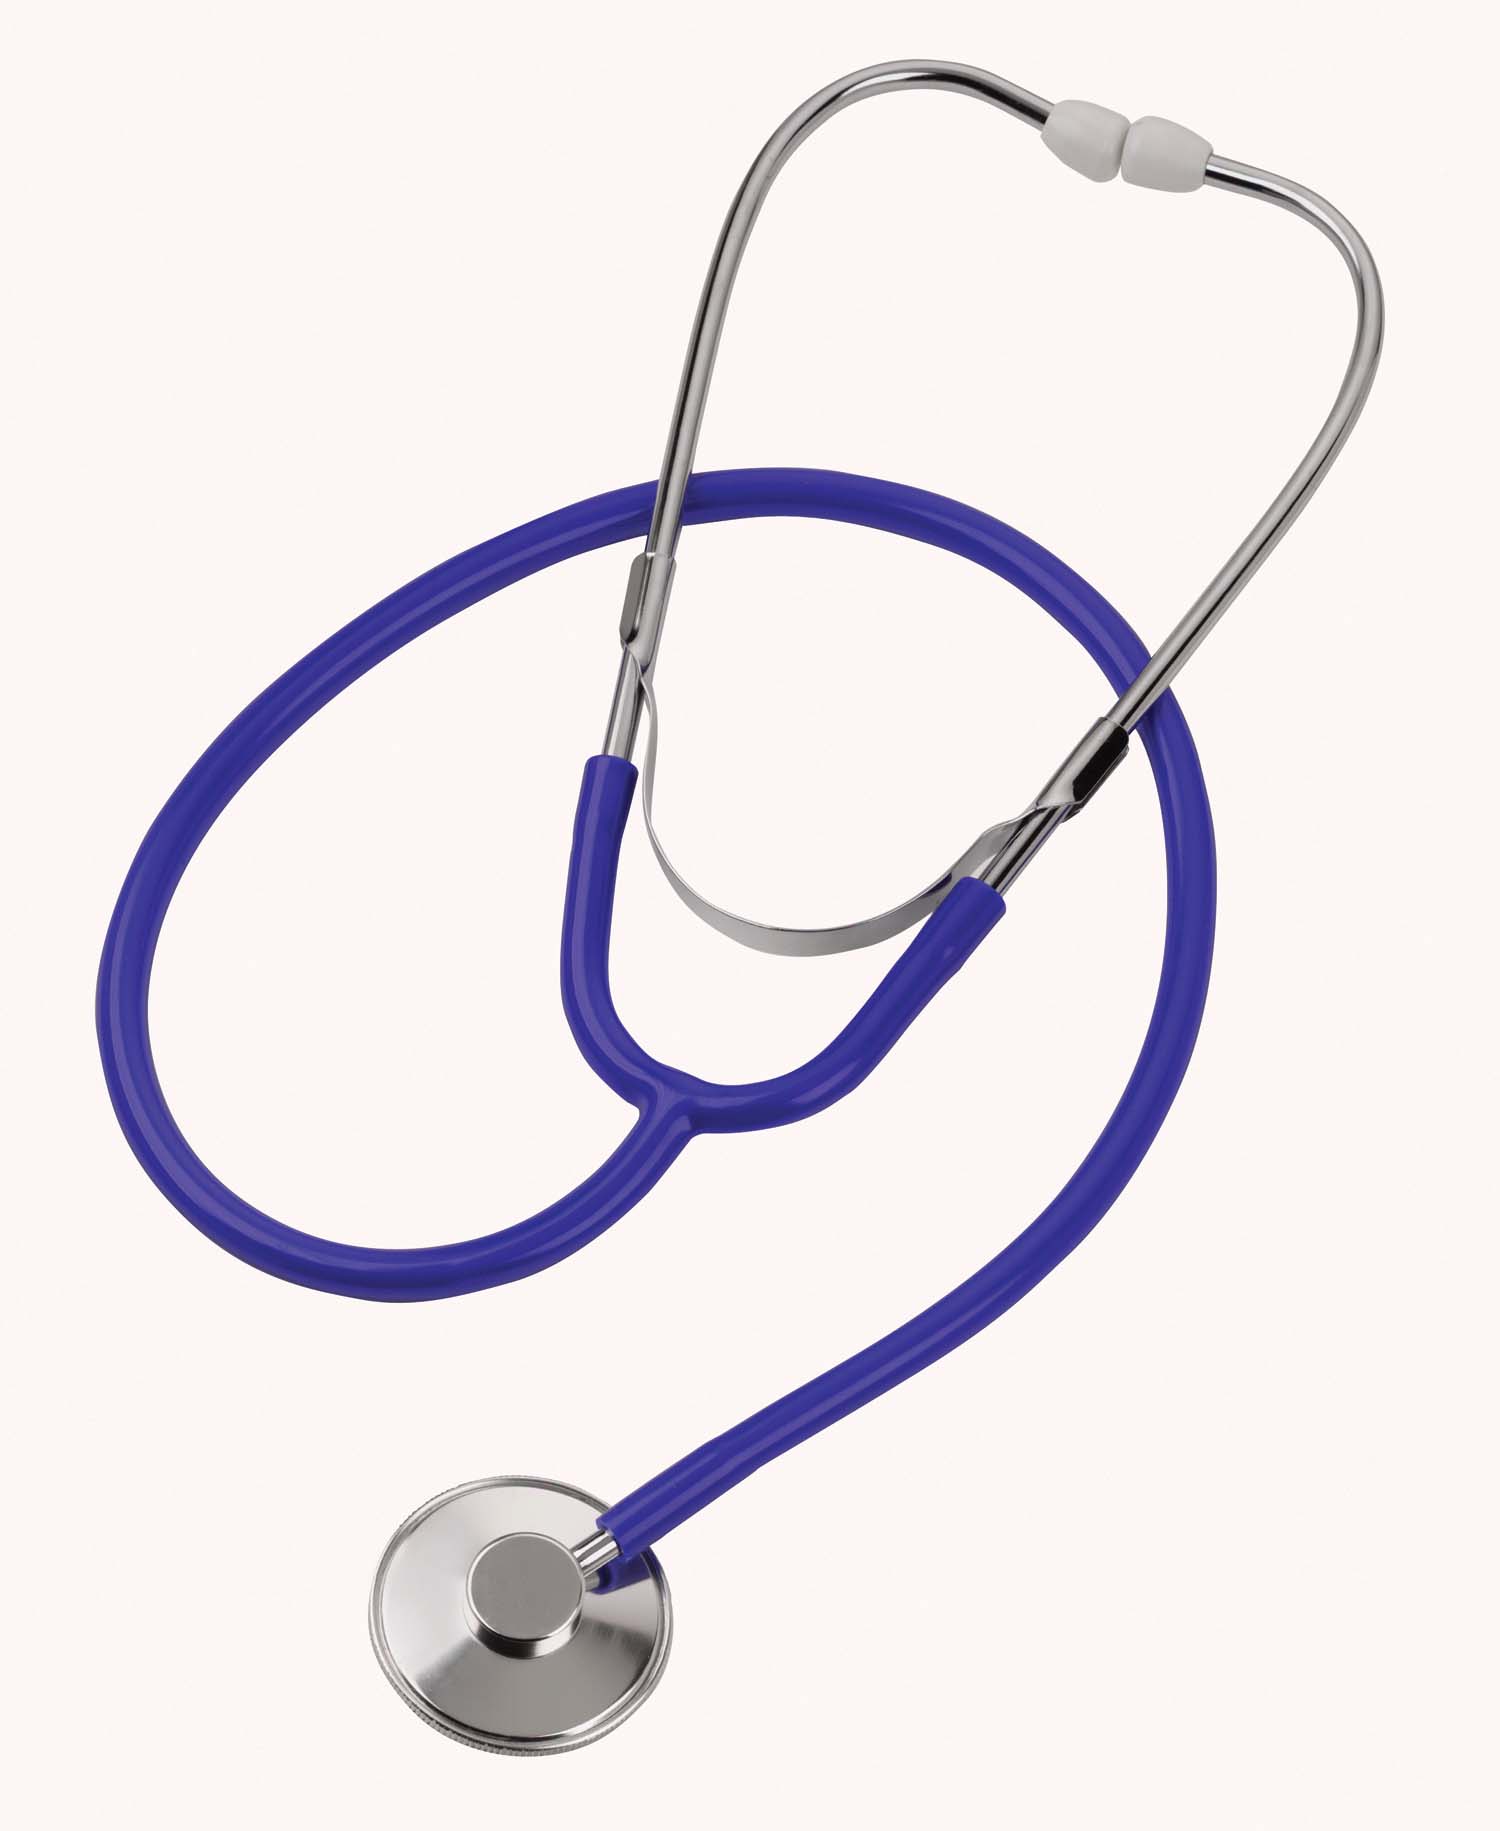 spectrum-nurse-stethoscope-adult-boxed-blue-10-428-010-lr.jpg